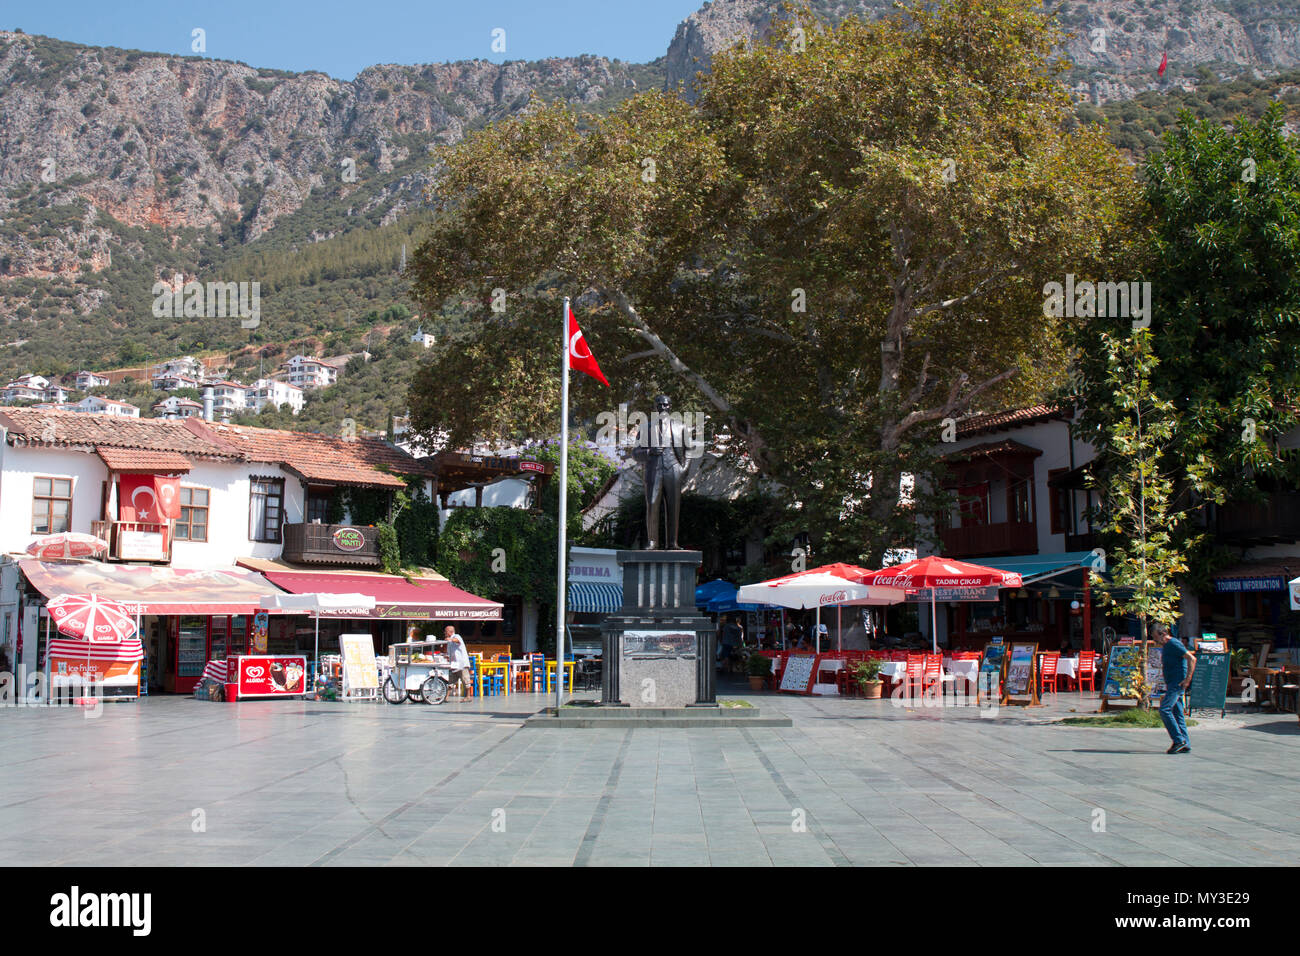 Ataturk Statue in Kas Square, Antalya Turkey Stock Photo